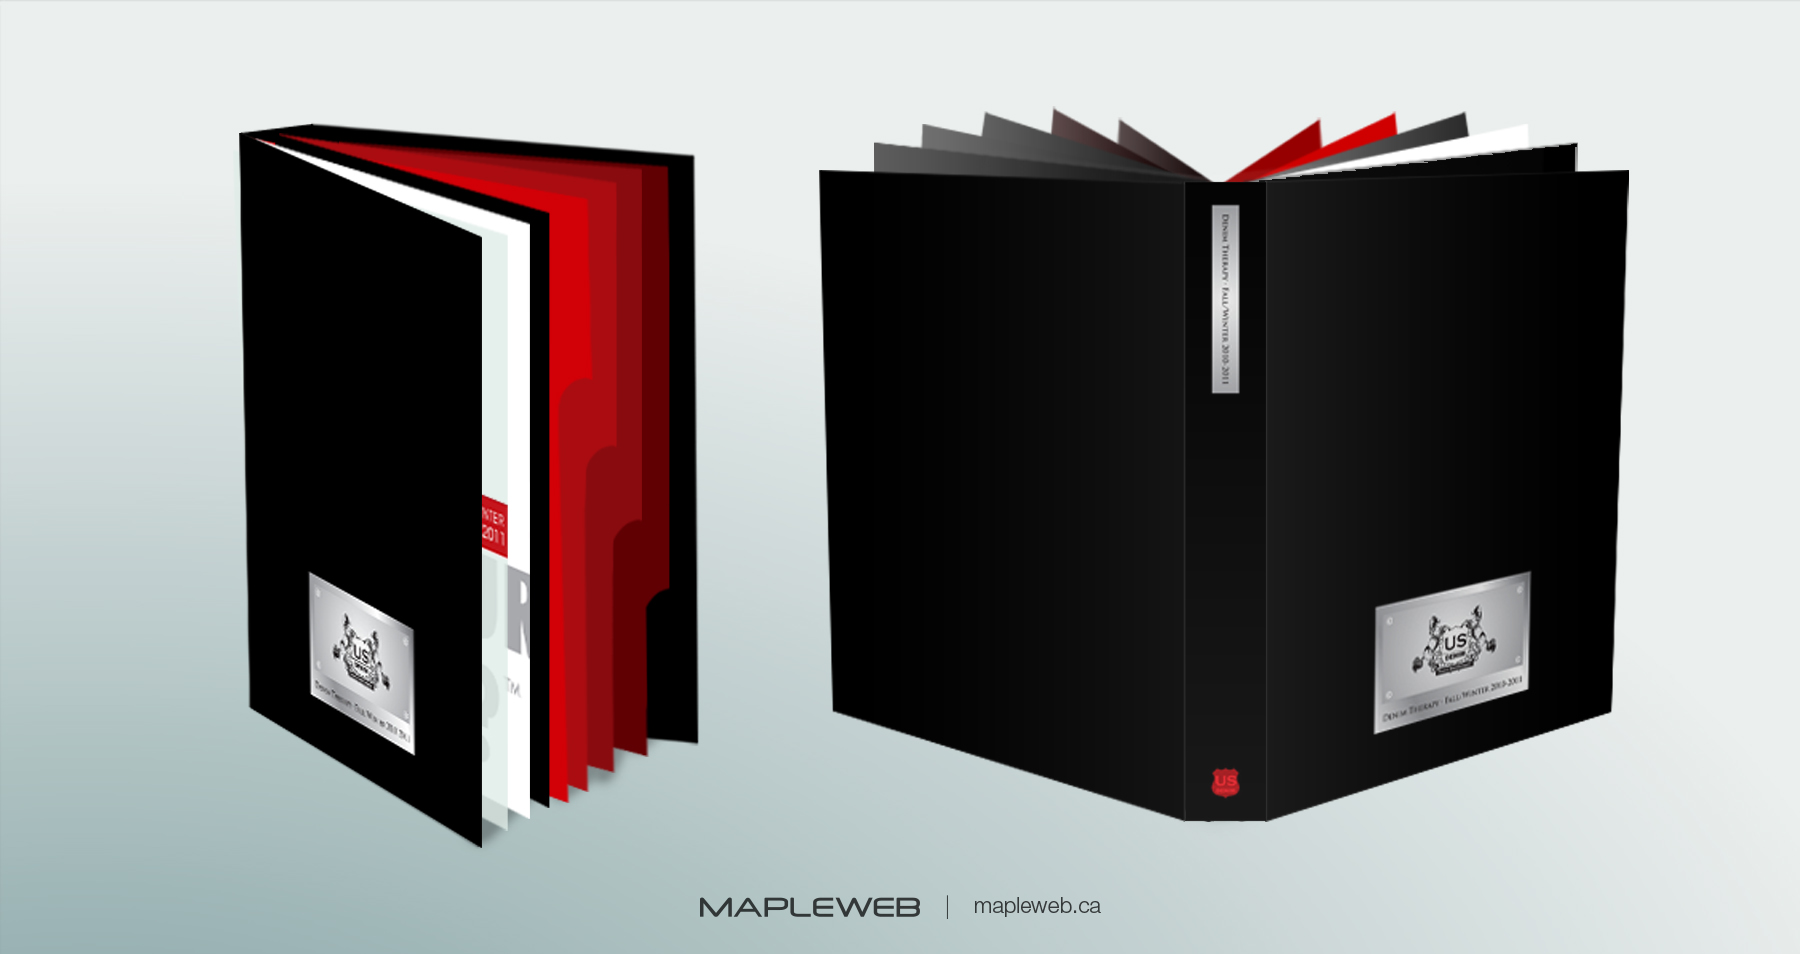 Us denim Book design by Mapleweb